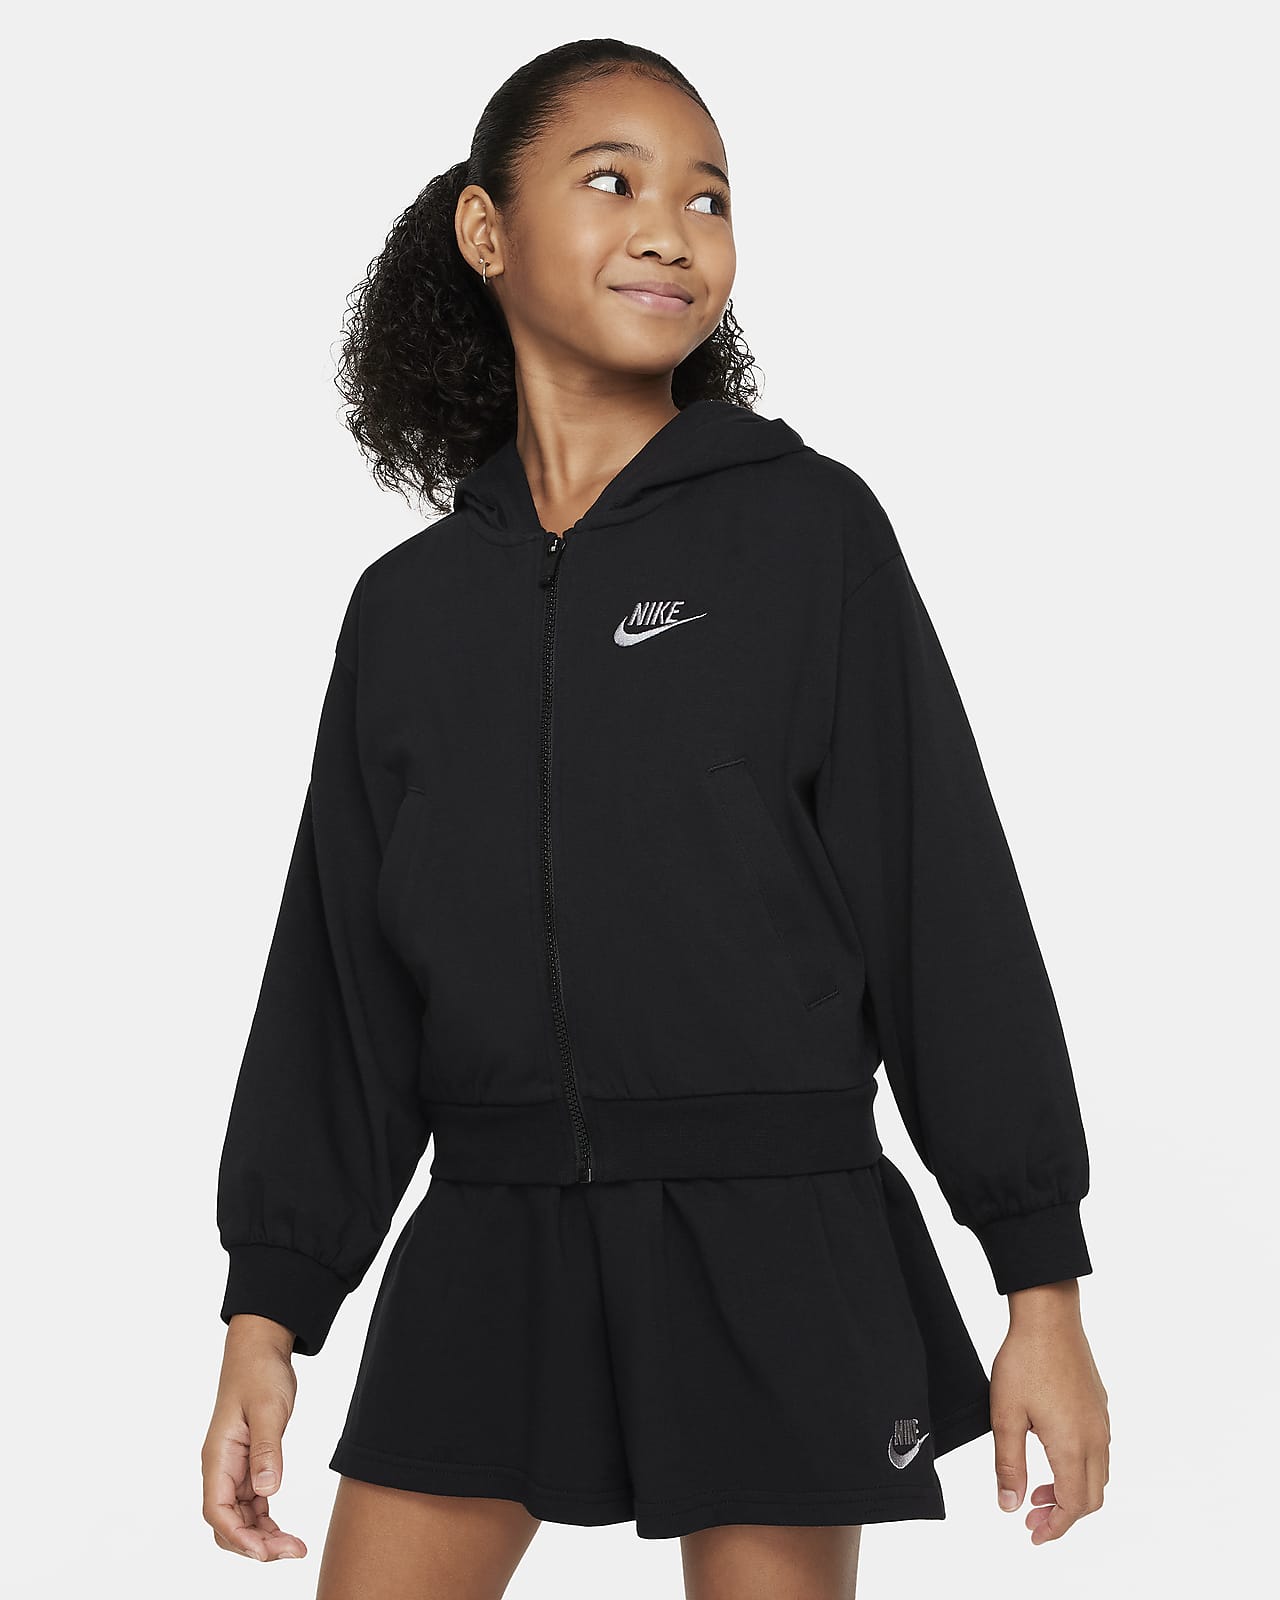 Nike Sportswear Big Kids' (Girls') Full-Zip Hoodie